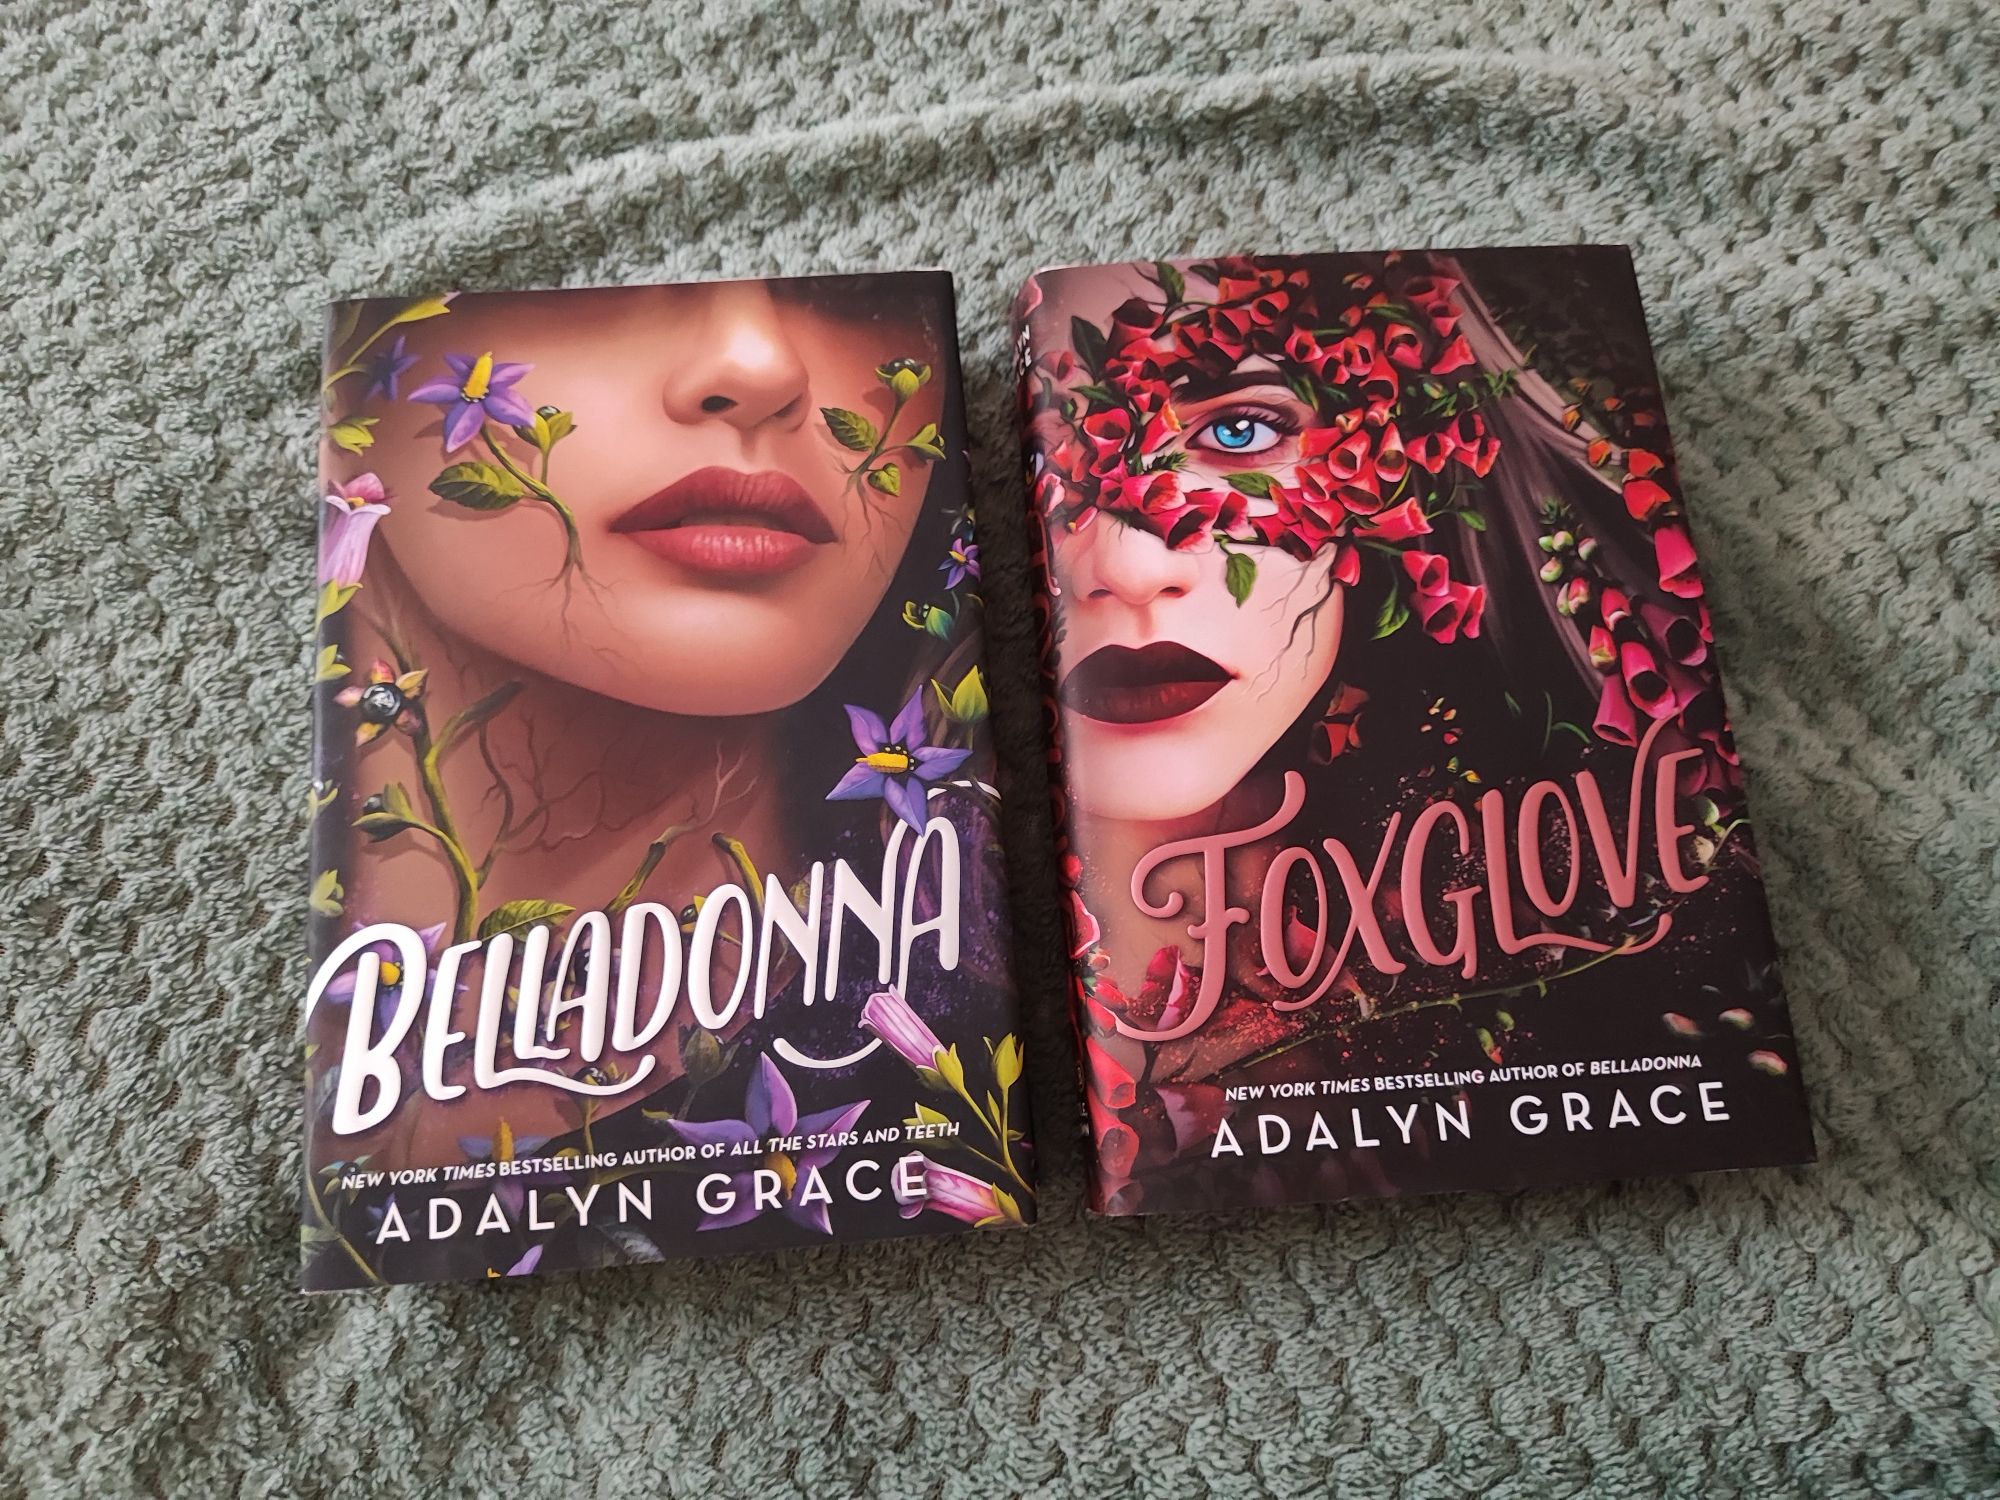 Adalyn Grace "Belladonna" + "Foxglove"